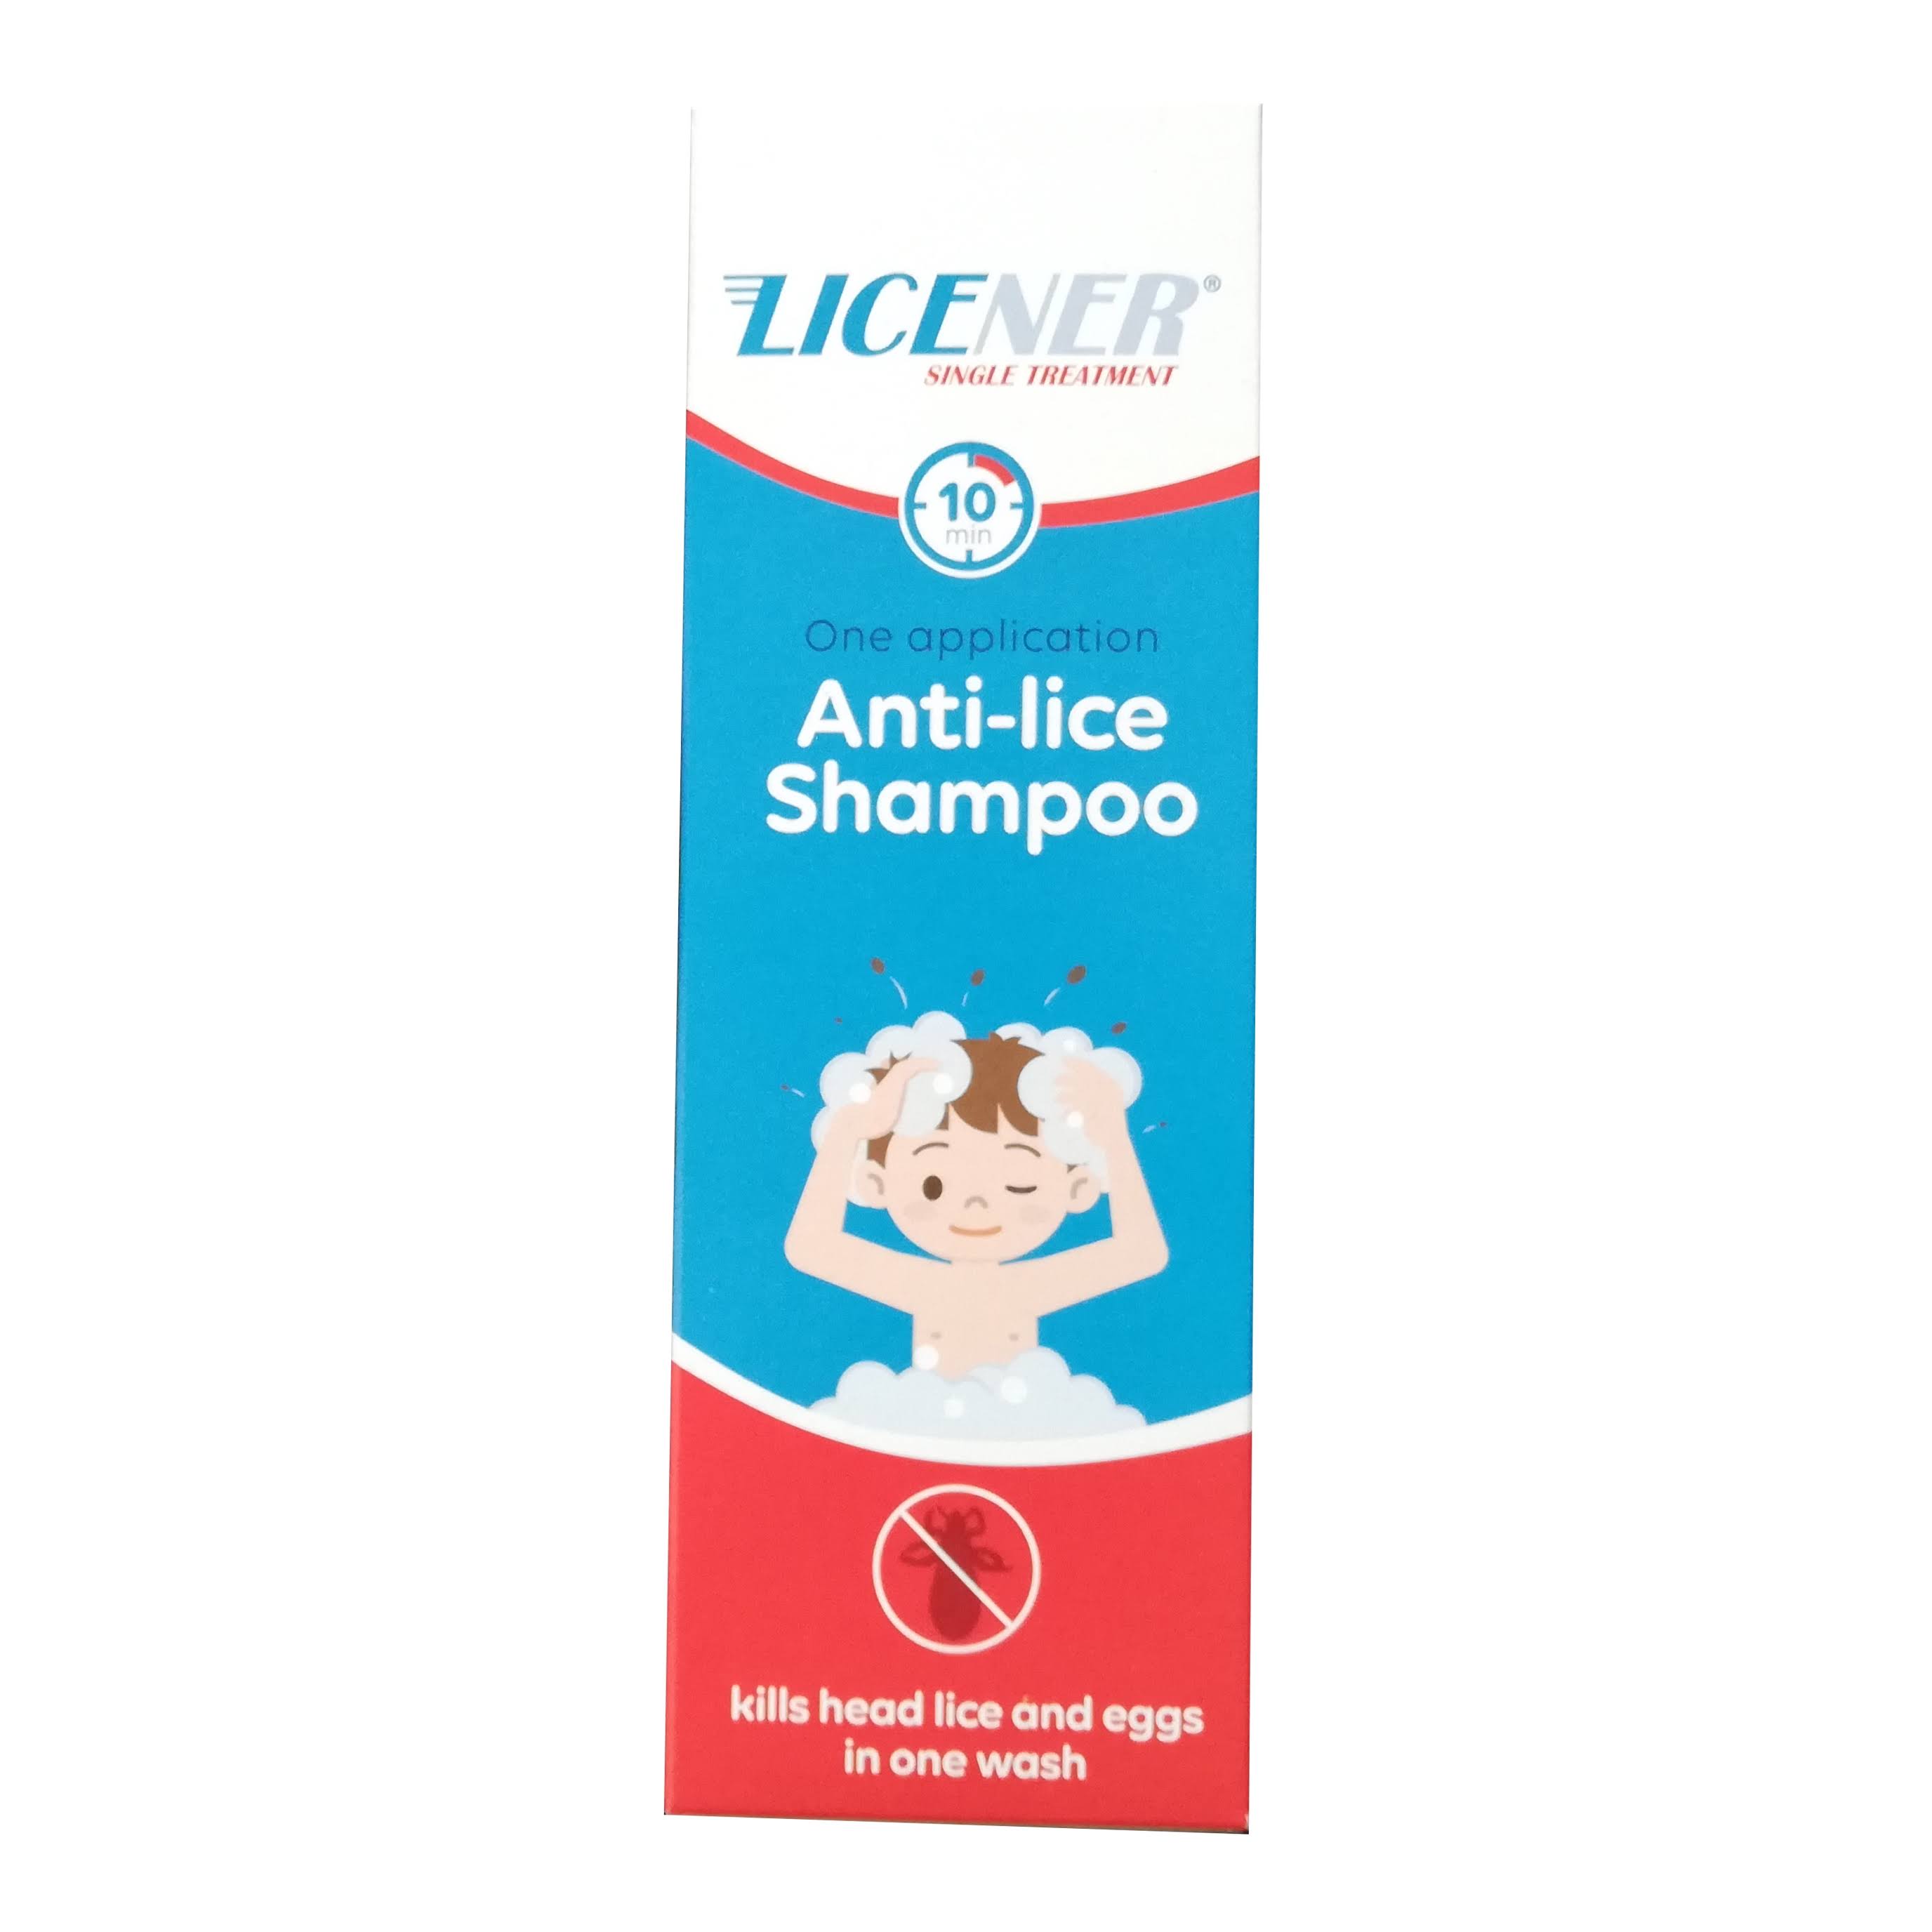 Licener Head Lice Treatment